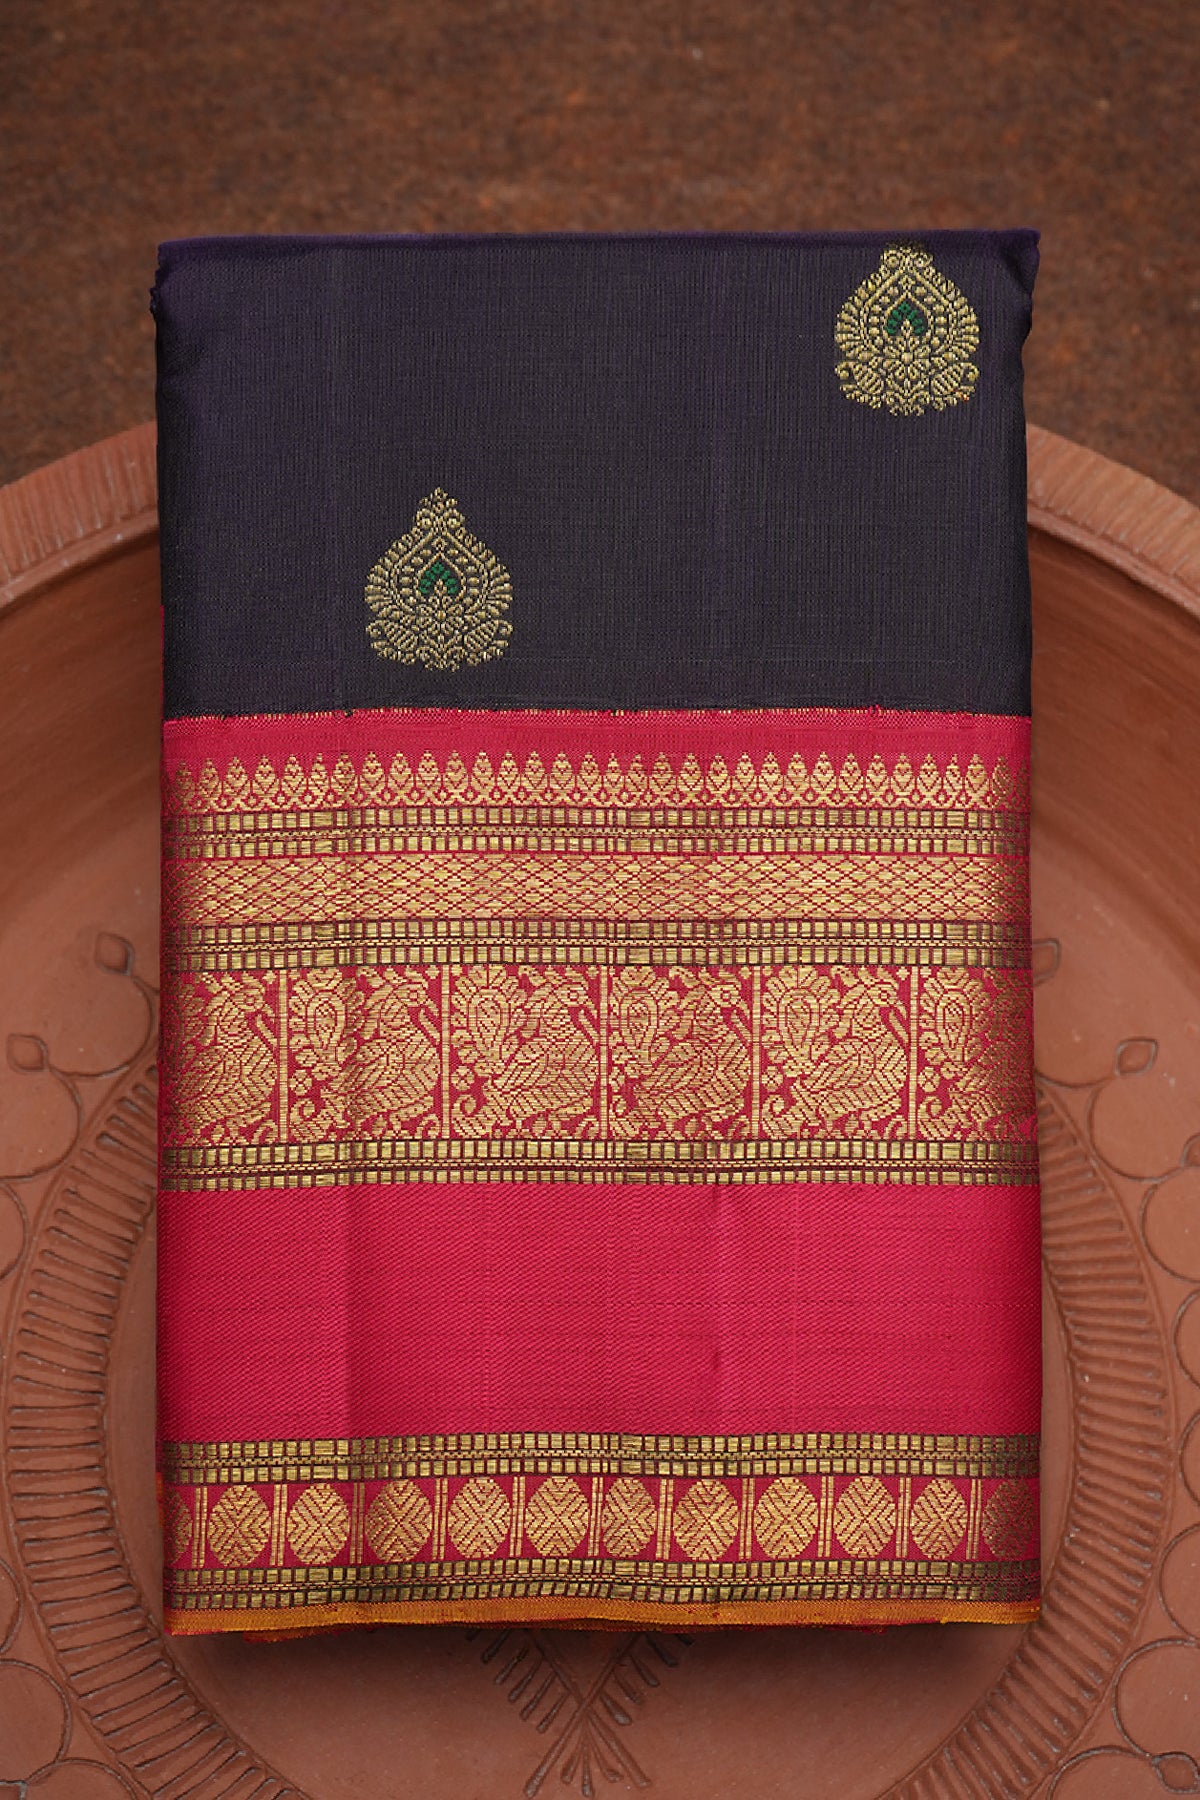 Meenakari Floral Motifs Deep Purple Kanchipuram Silk Saree